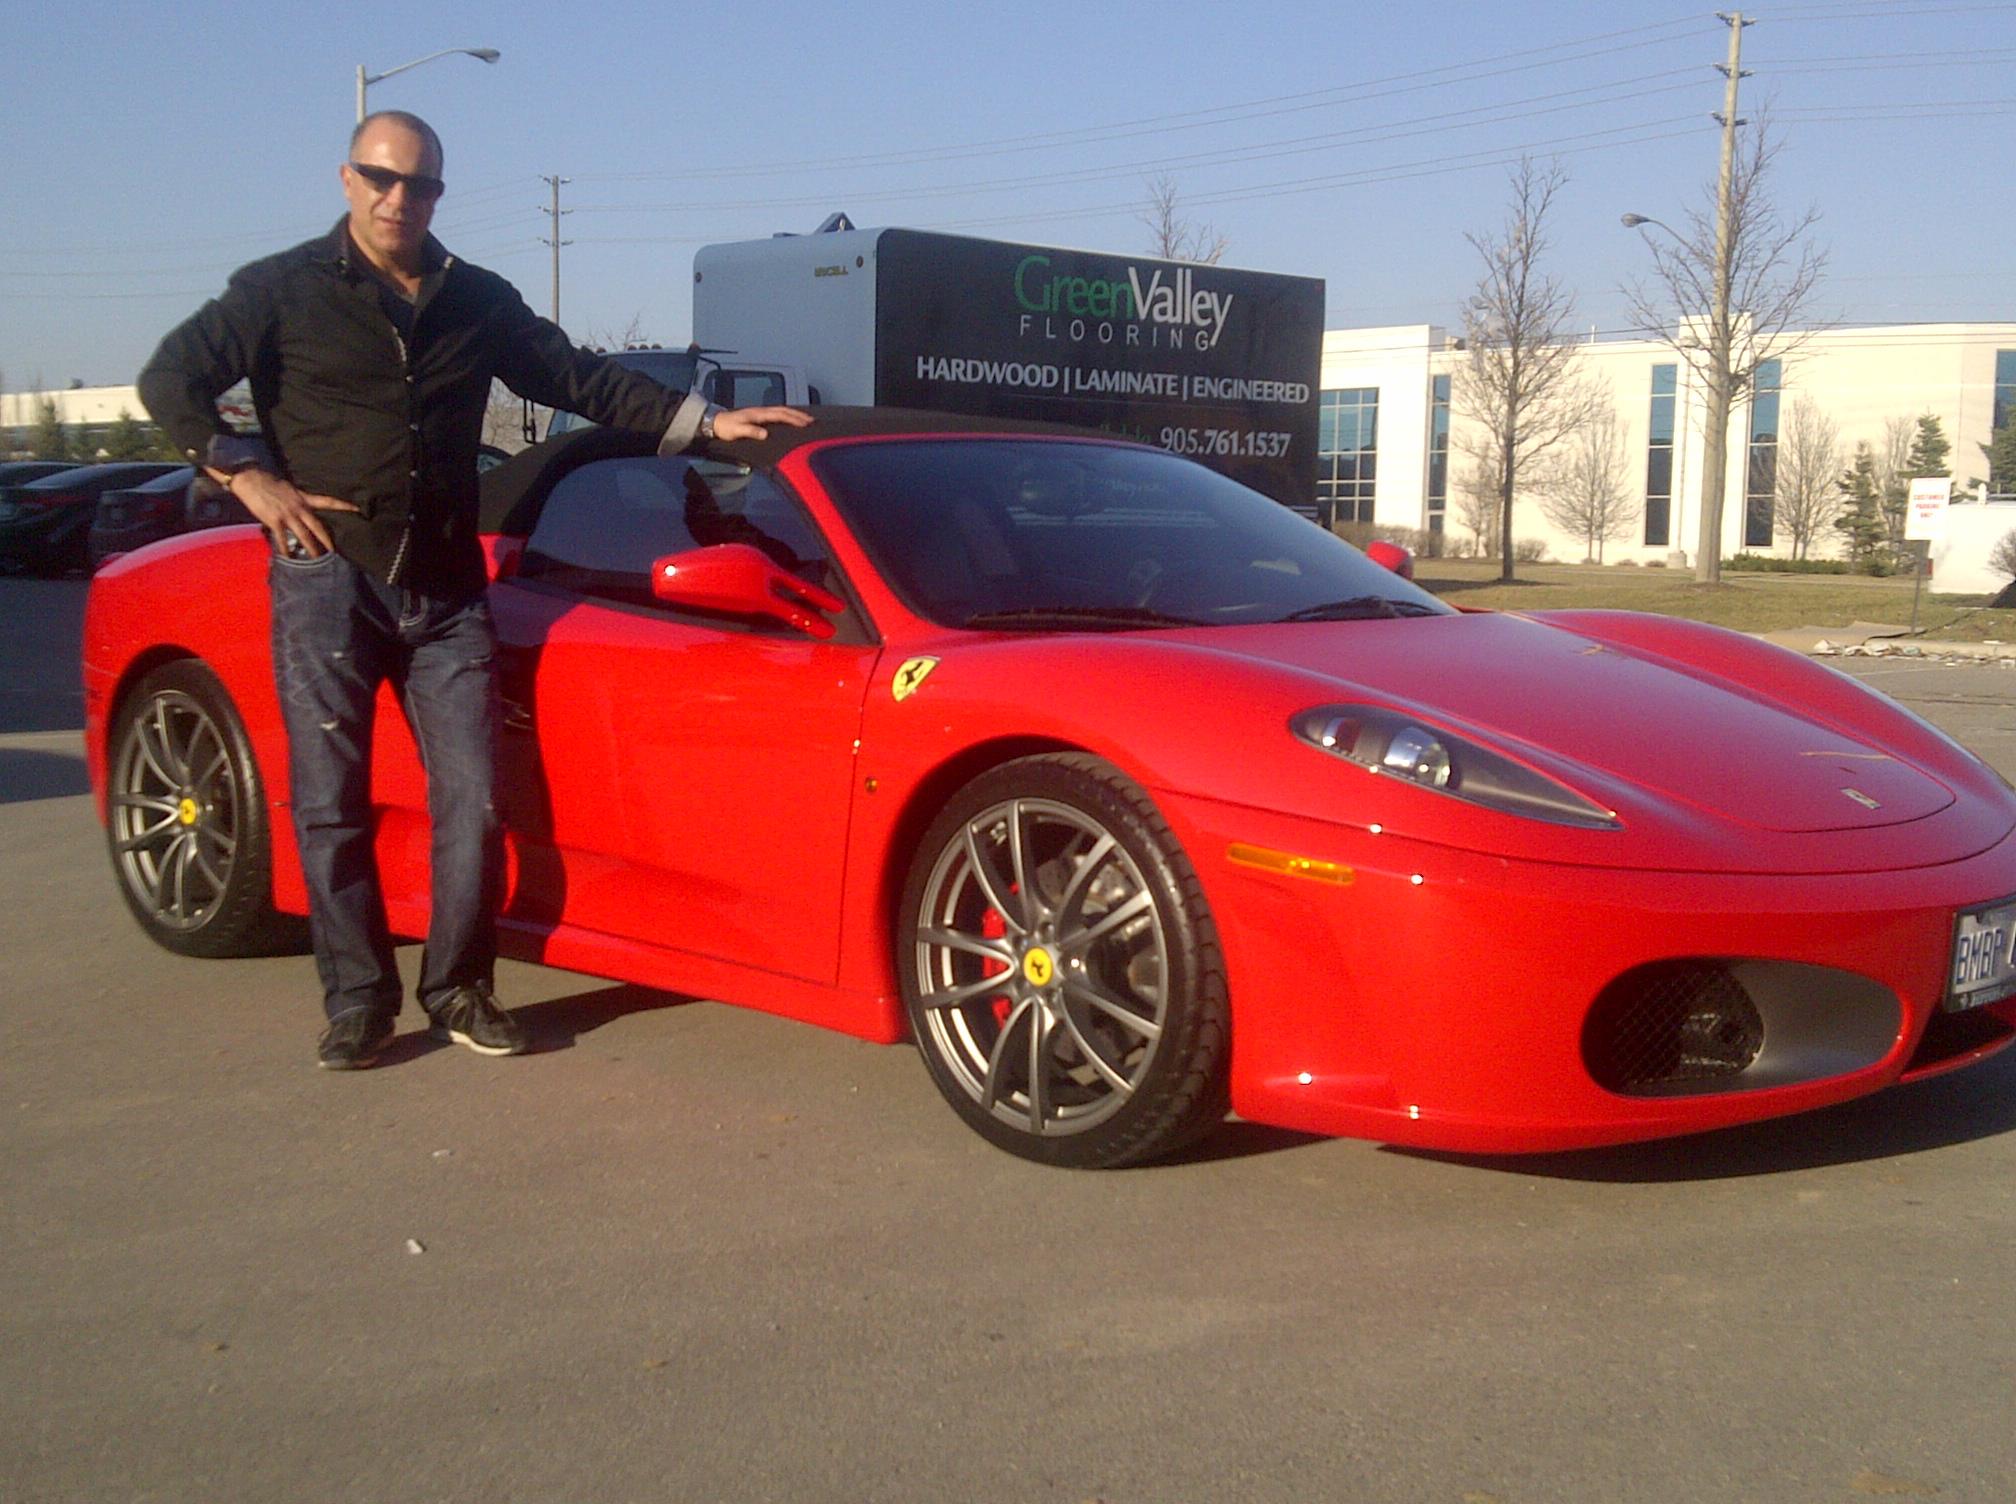 Bernaudo in his nice Ferrari 